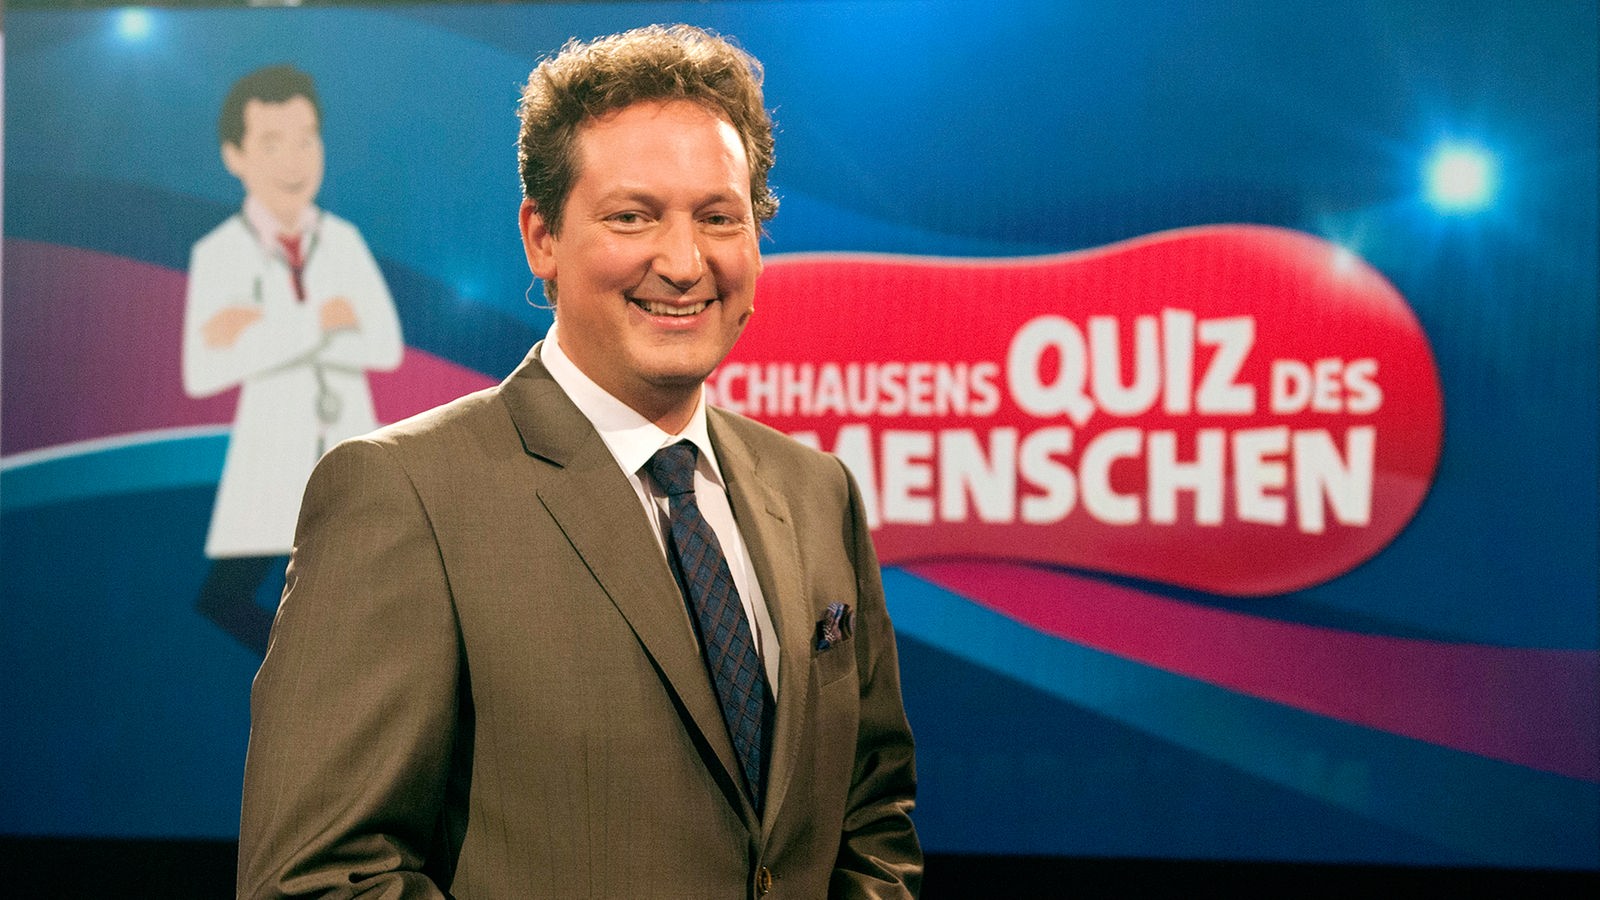 Hirschhausens Quiz des Menschen - Hirschhausens Quiz - Sendungen A-Z ...